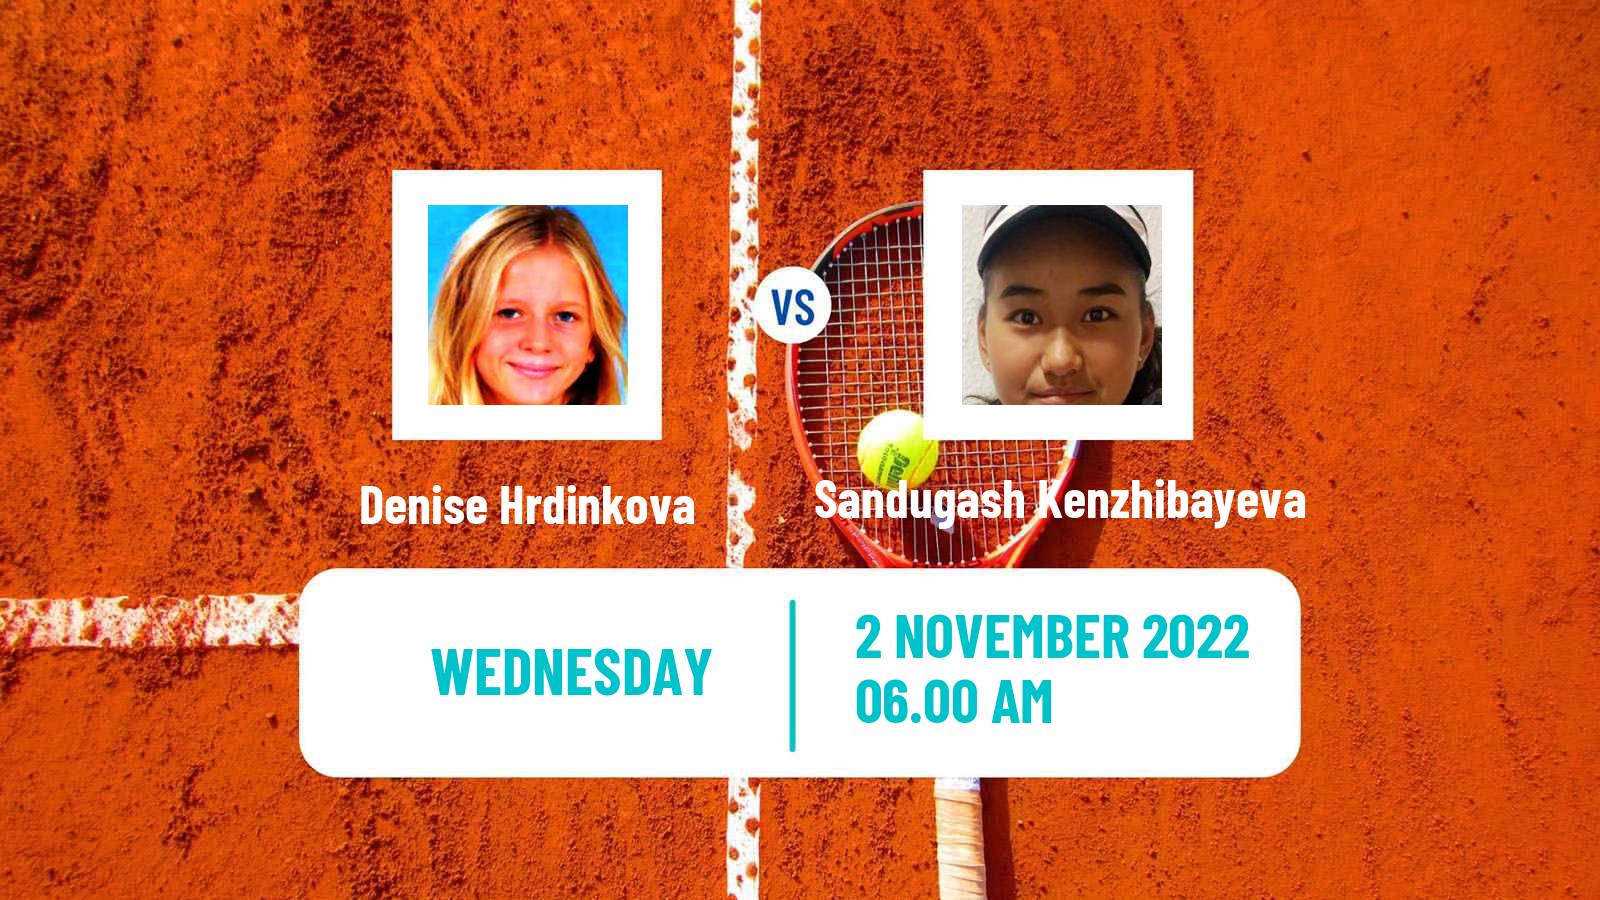 Tennis ITF Tournaments Denise Hrdinkova - Sandugash Kenzhibayeva